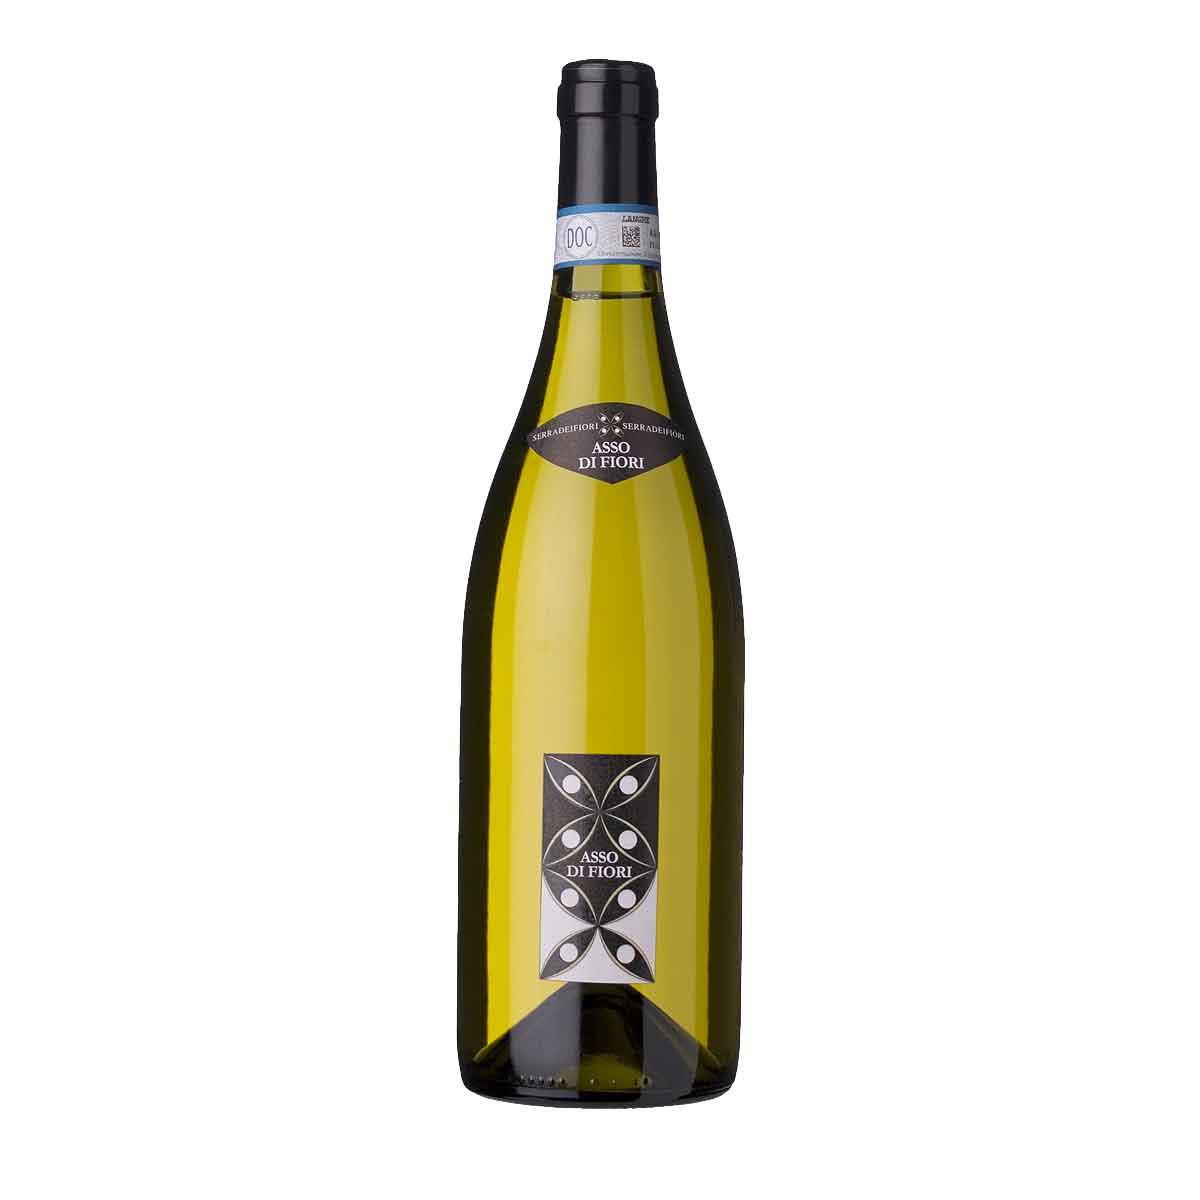 Langhe Chardonnay Asso di Fiori, Braida, Vini Bianchi - Privilege Wine